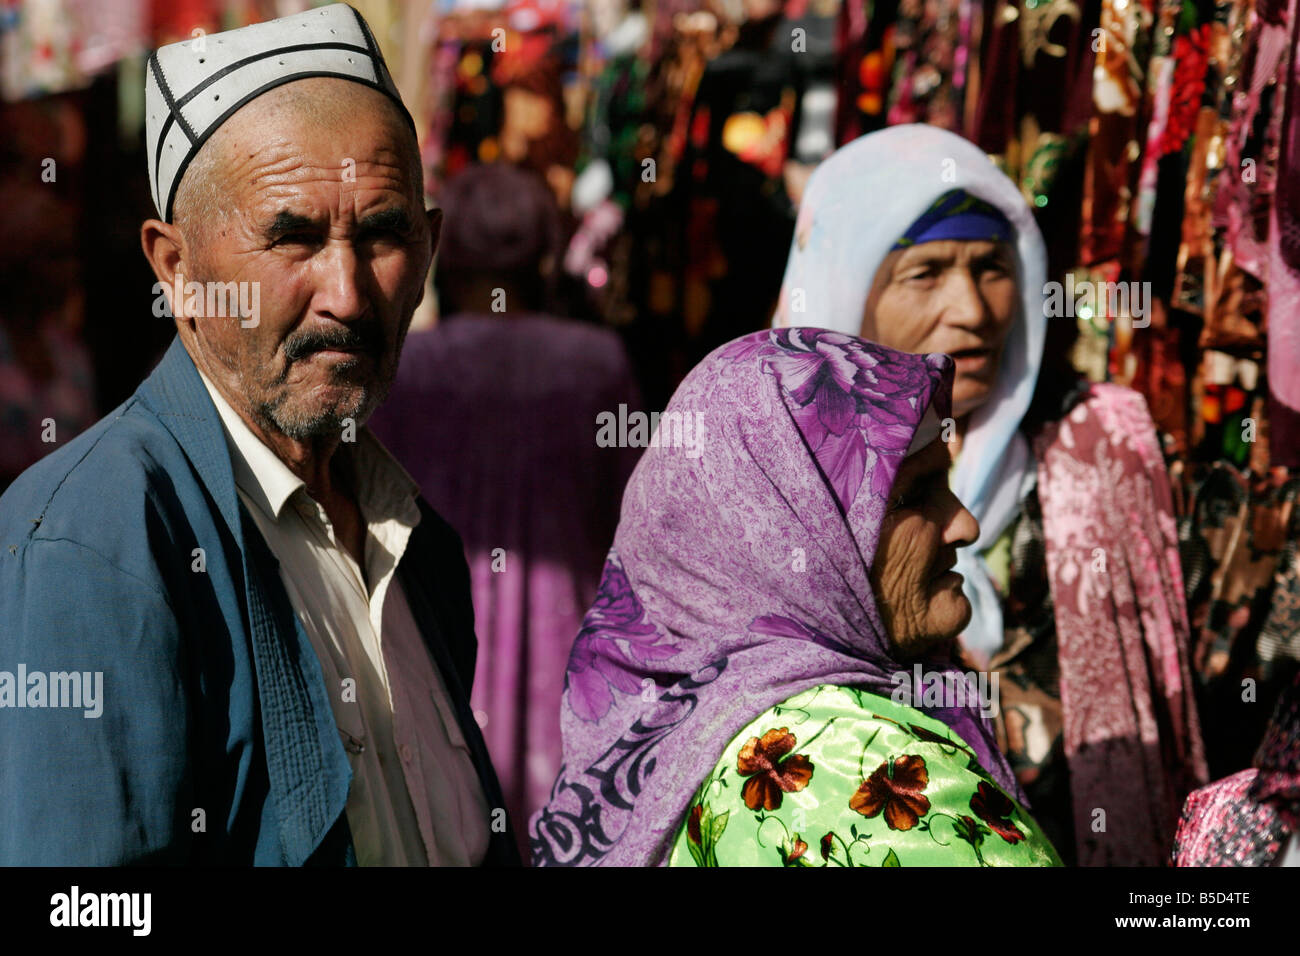 Uzbek man traditional hat cap -Fotos und -Bildmaterial in hoher Auflösung –  Alamy